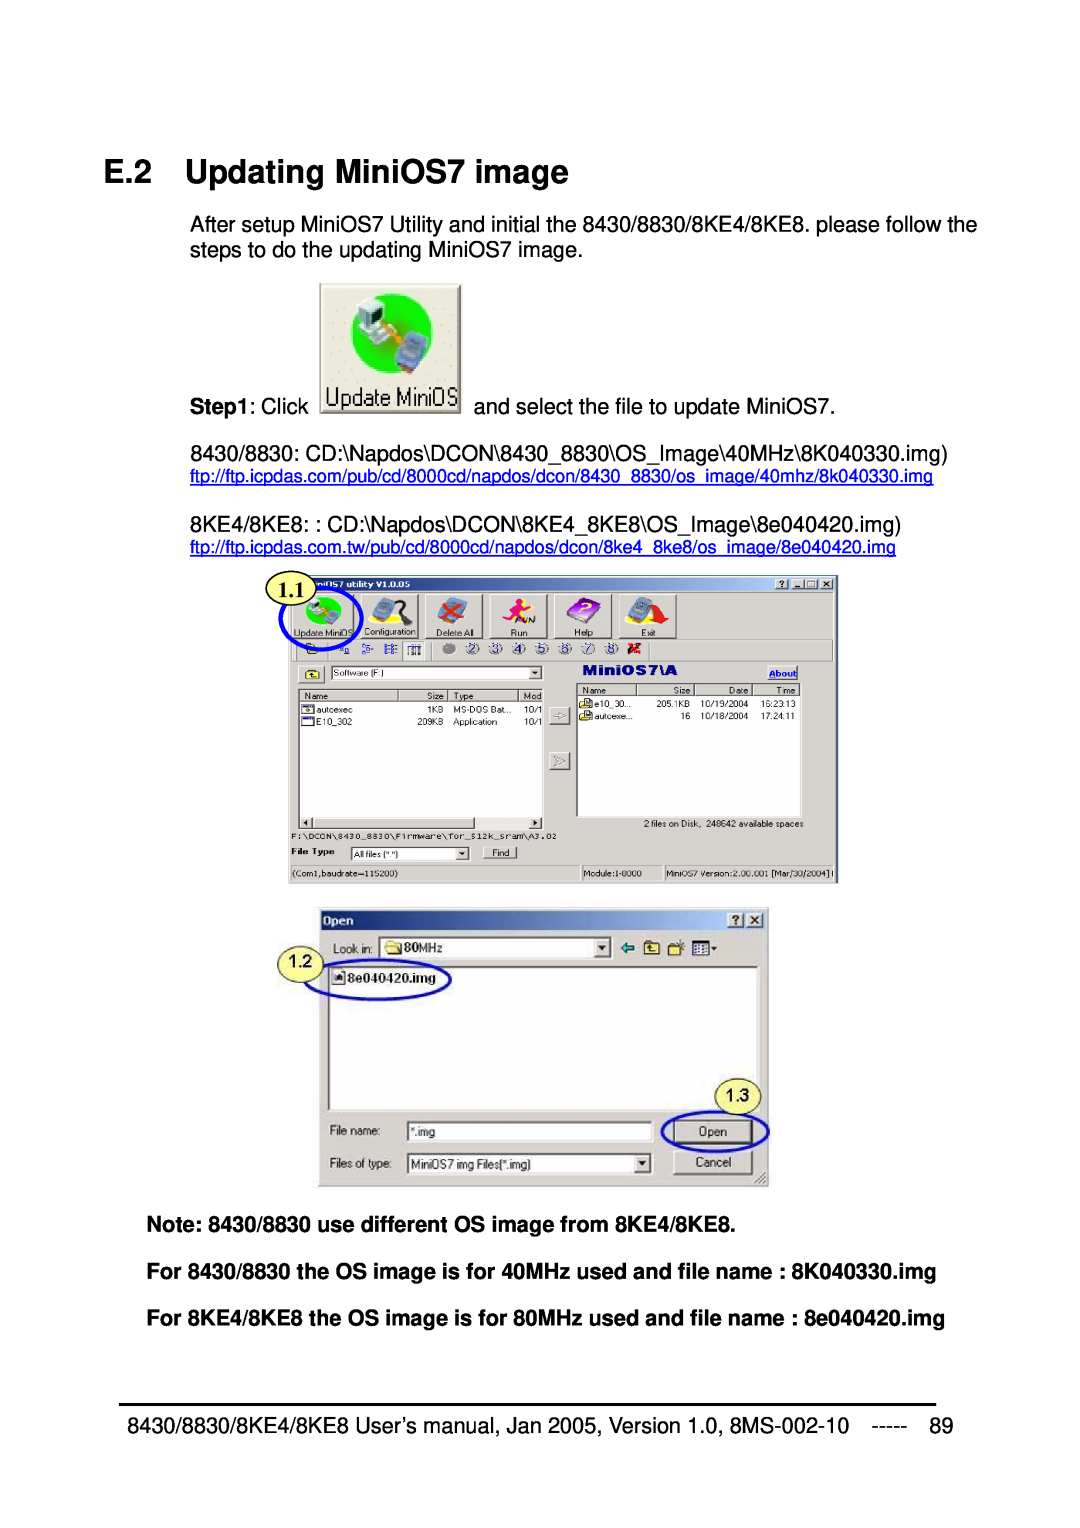 ICP DAS USA 8KE4, 8KE8, 8430, 8830 user manual E.2 Updating MiniOS7 image 